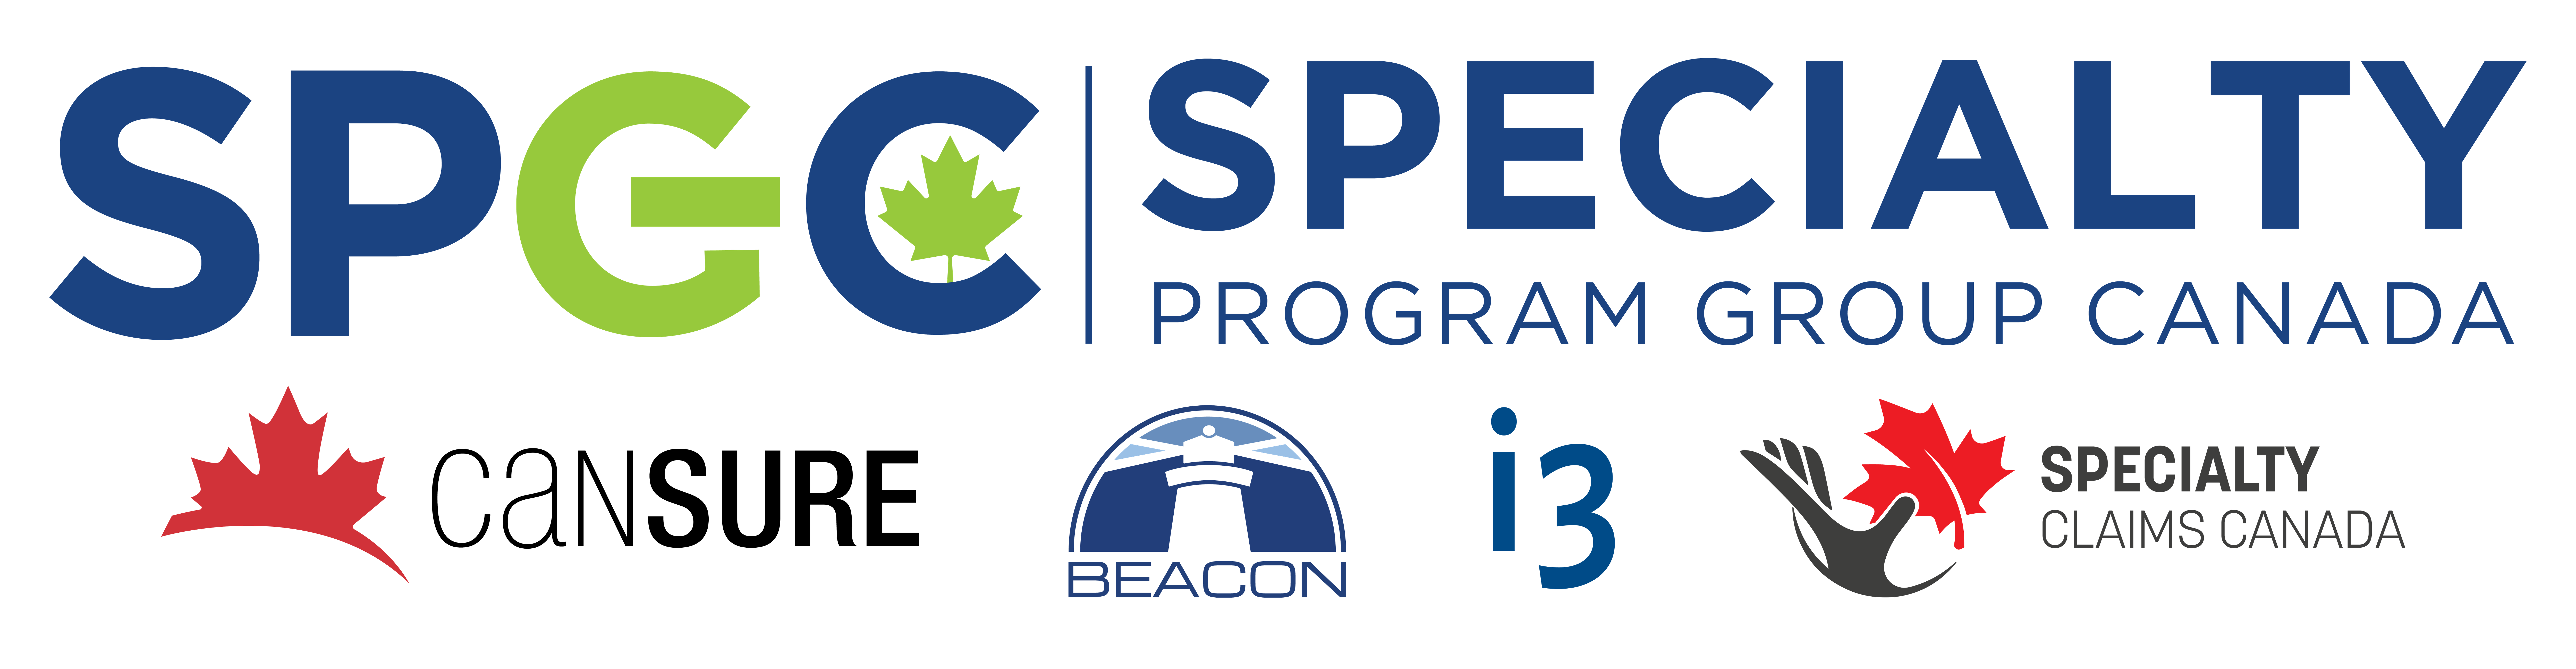 Specialty Program Group Canada